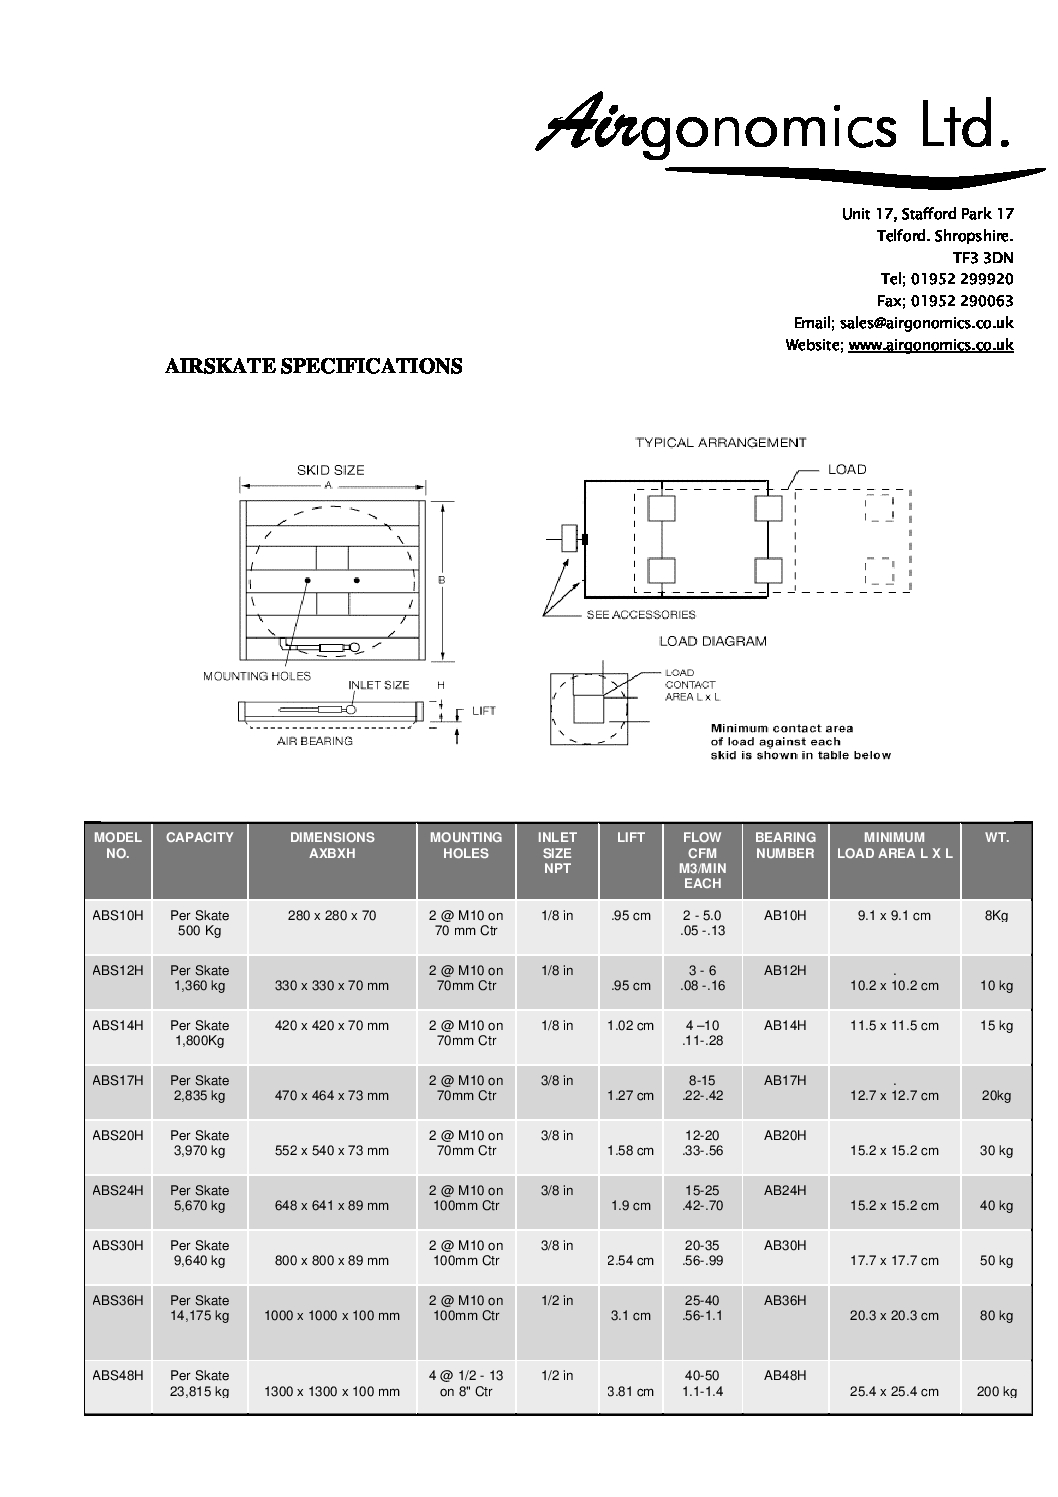 Airskate-Specification-pdf.jpg